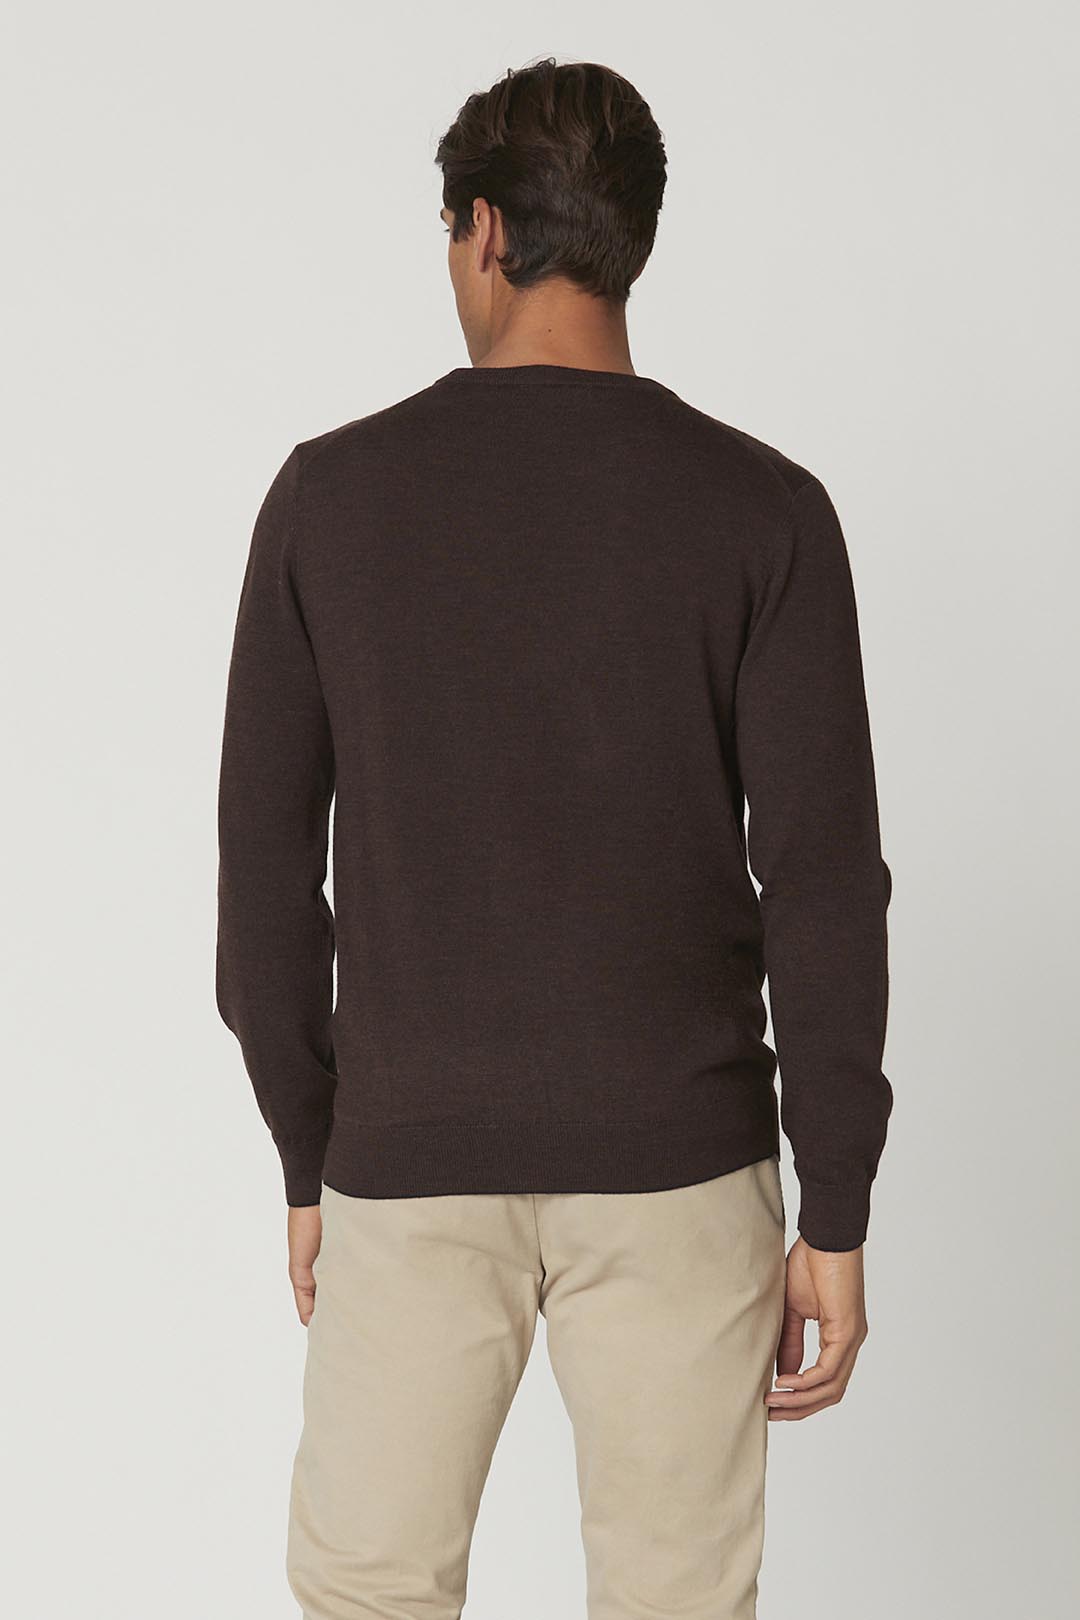 Basic crew neck wool sweater